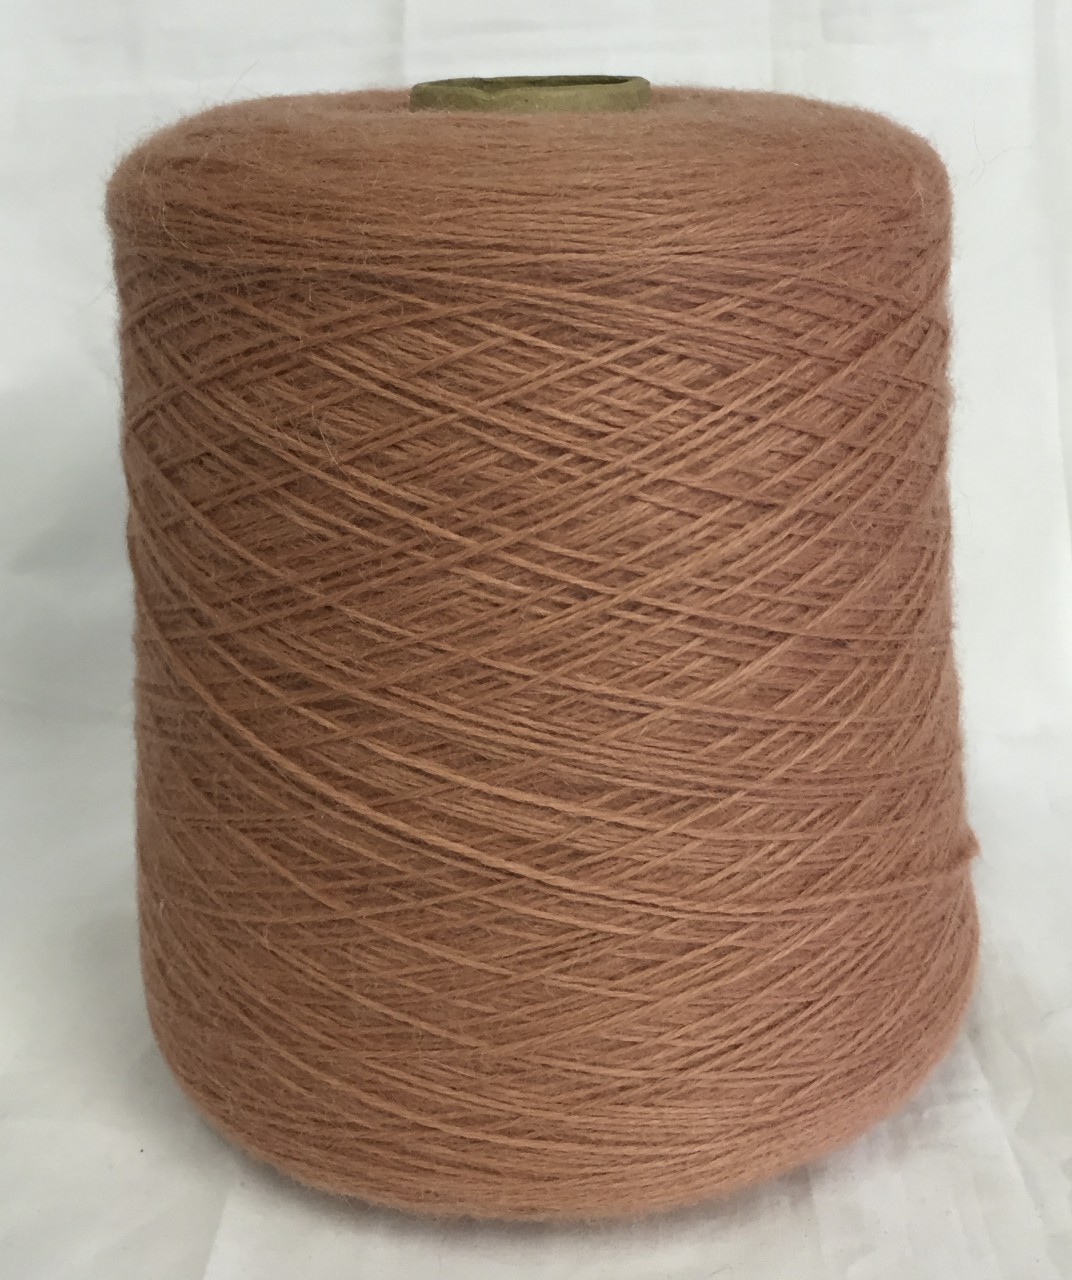 wool yarn cones factory huicai wholesale